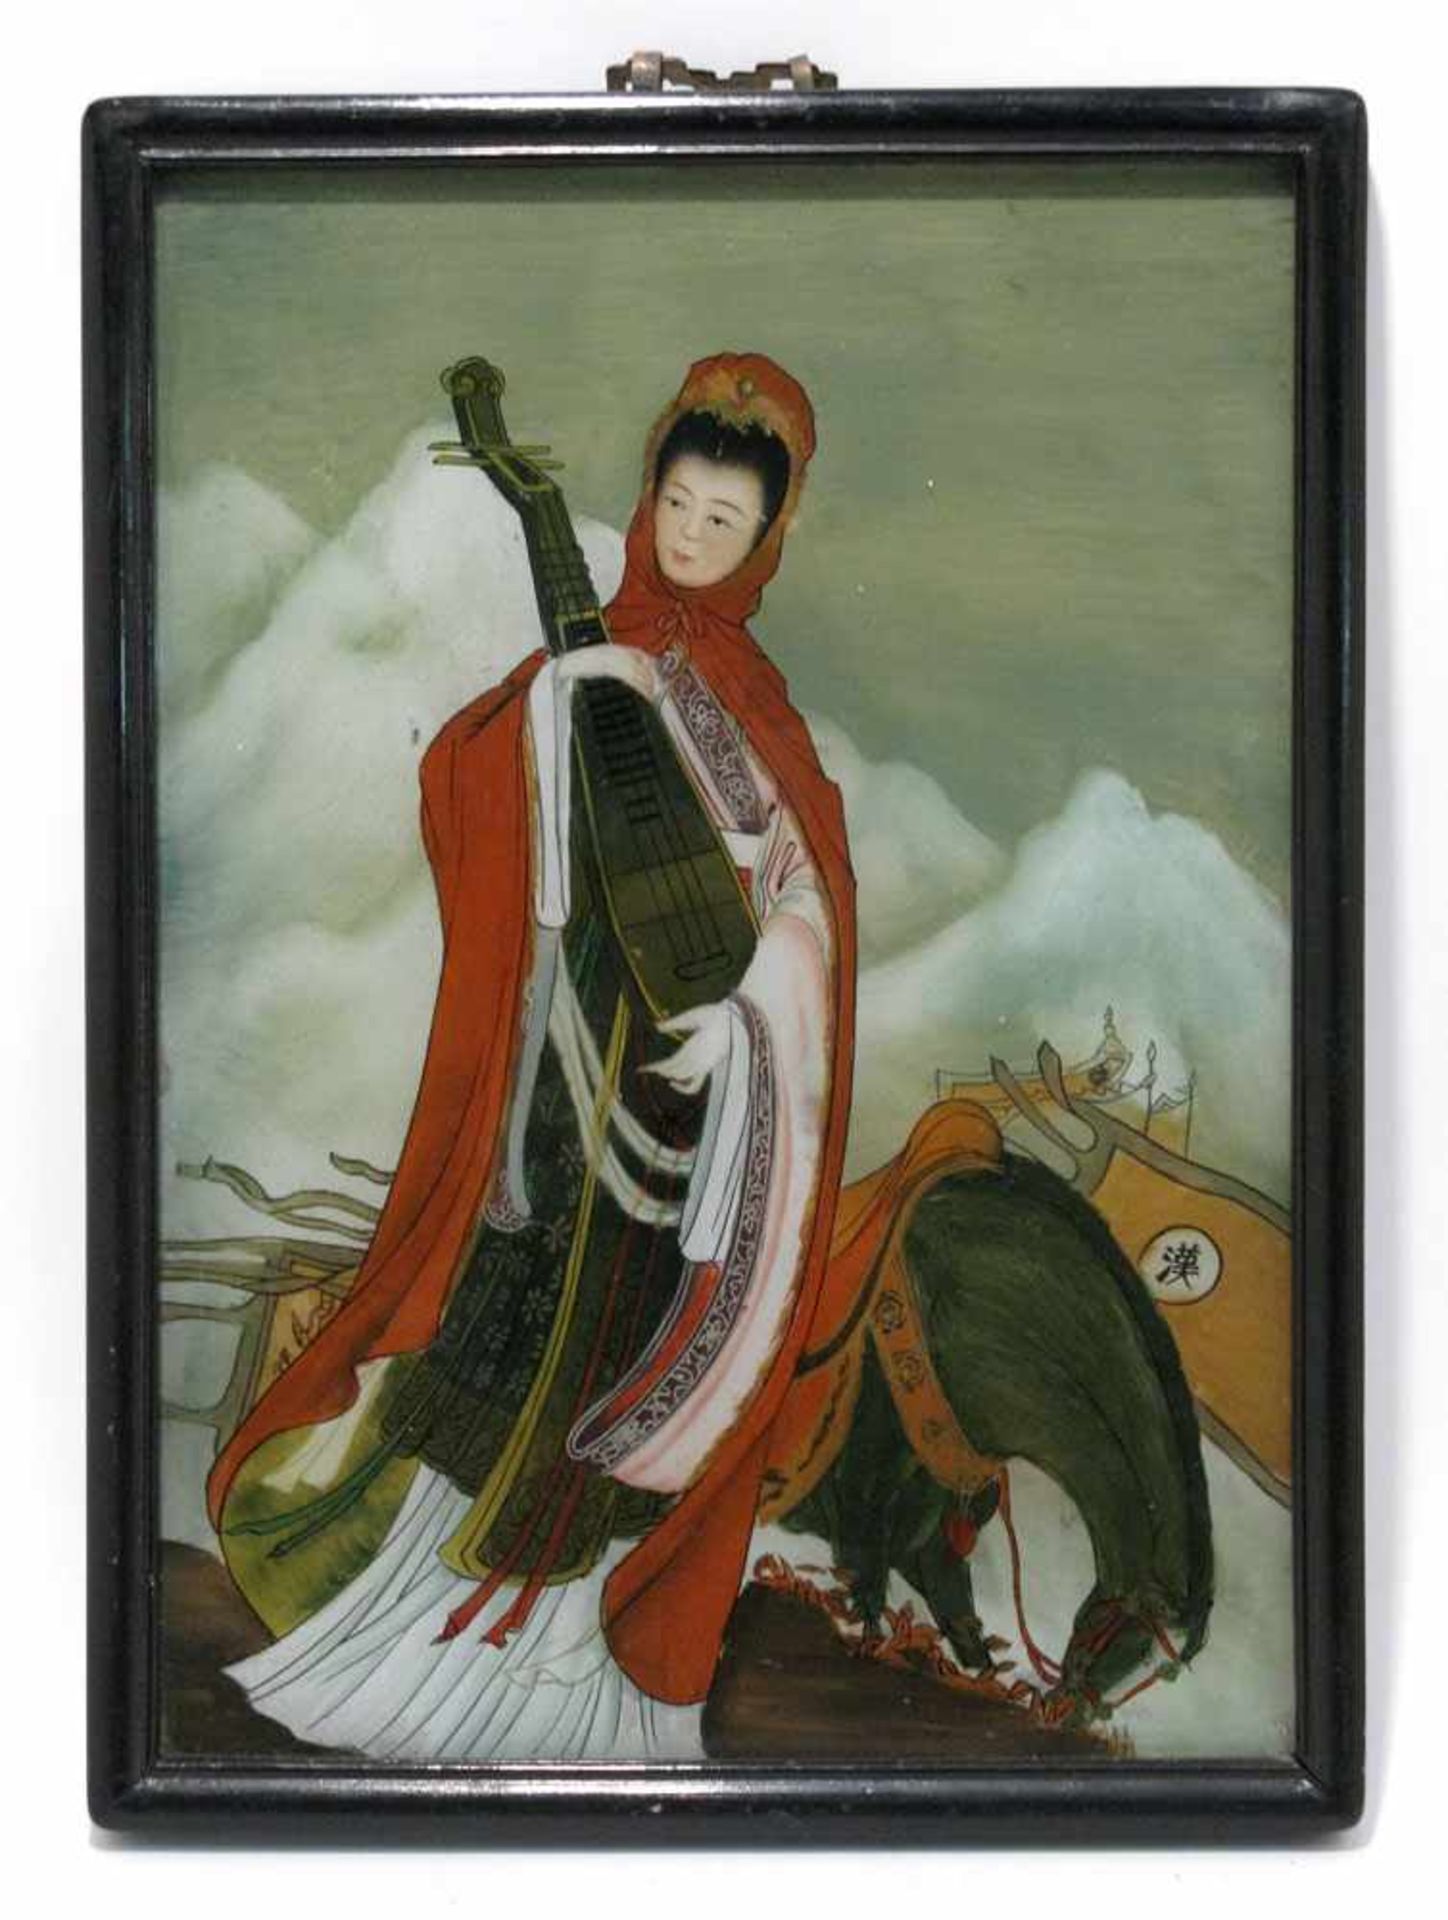 Hinterglasbild: Junge Frau mit Laute China, wohl 1. Hälfte 20. Jh. 36 x 26 cm. Rahmen.